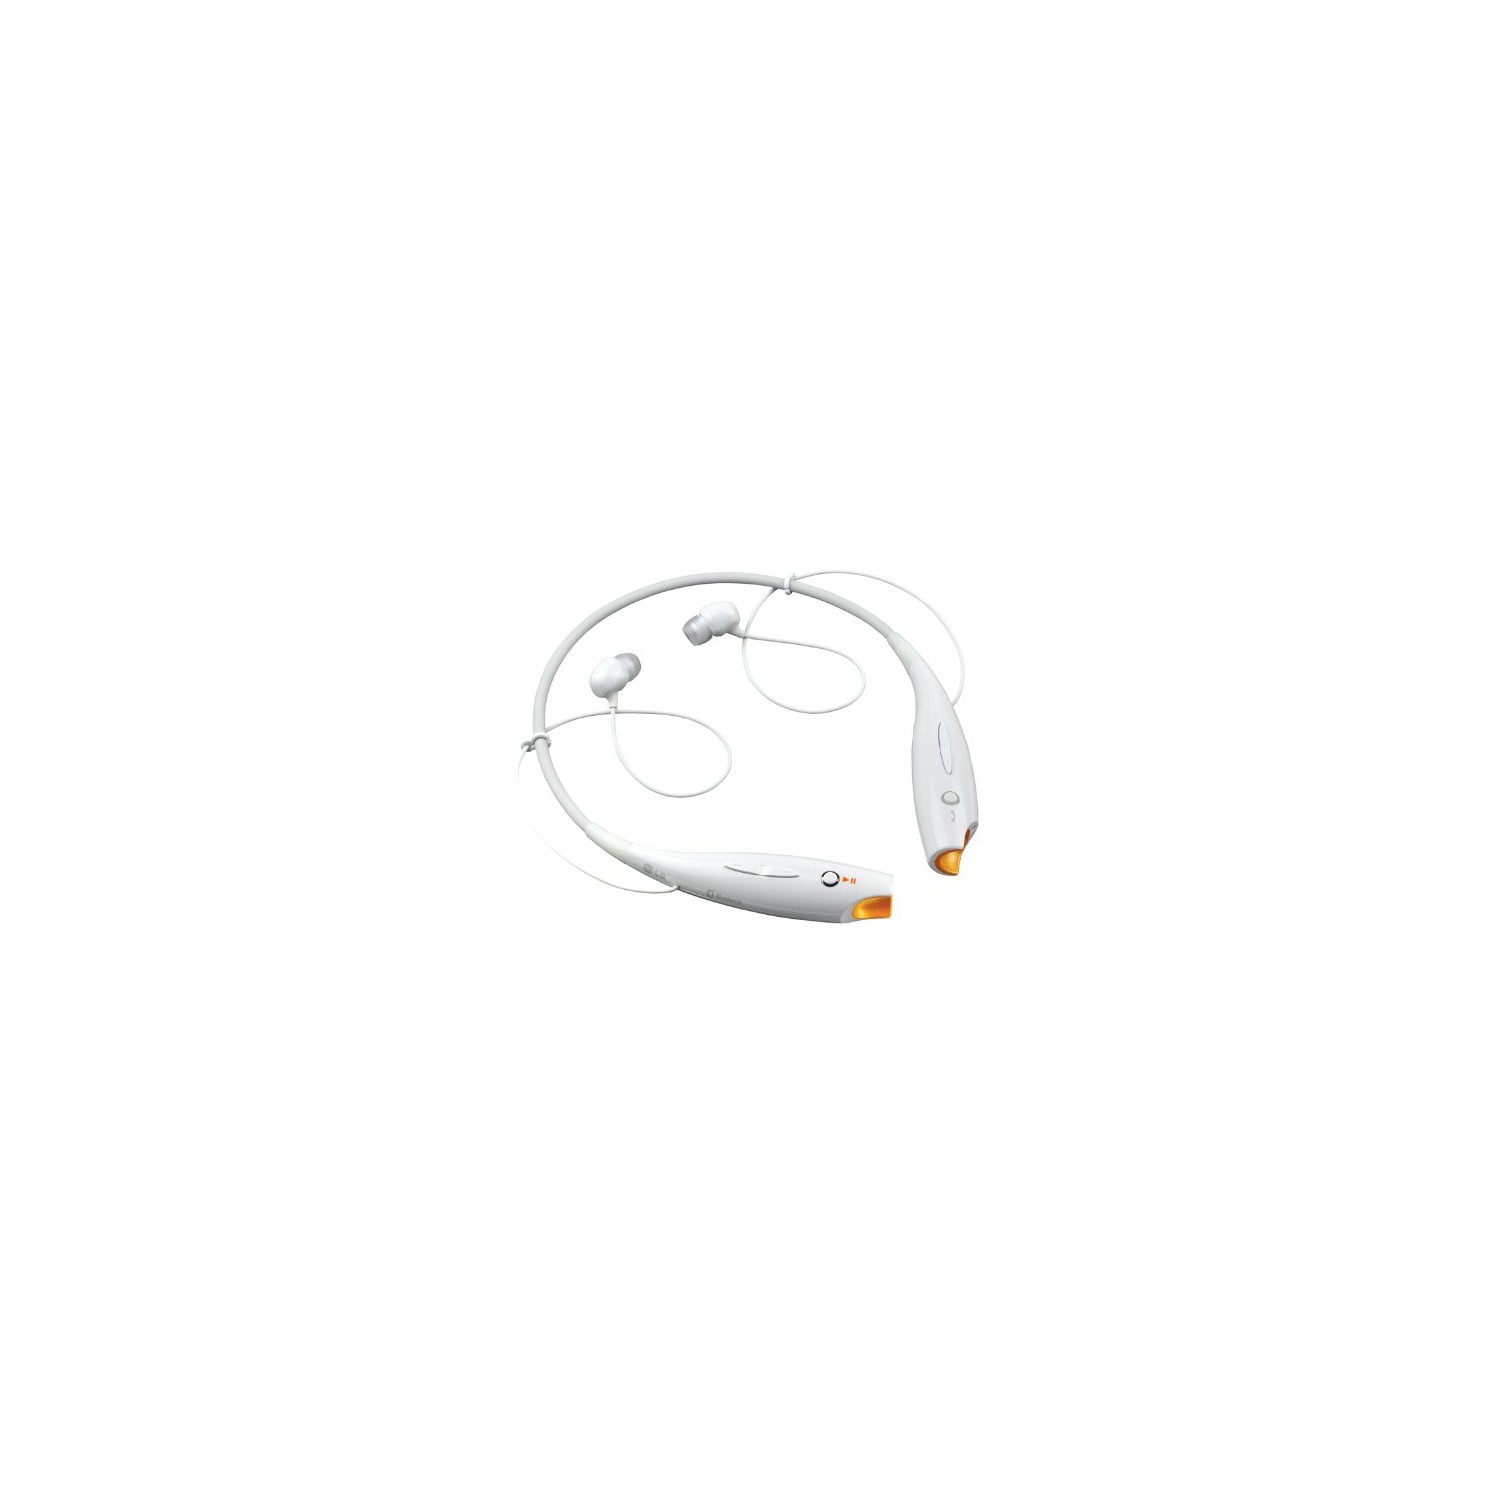 LG Electronics HBS-700W Wireless Bluetooth Stereo Bluetooth Headset - White/Orange